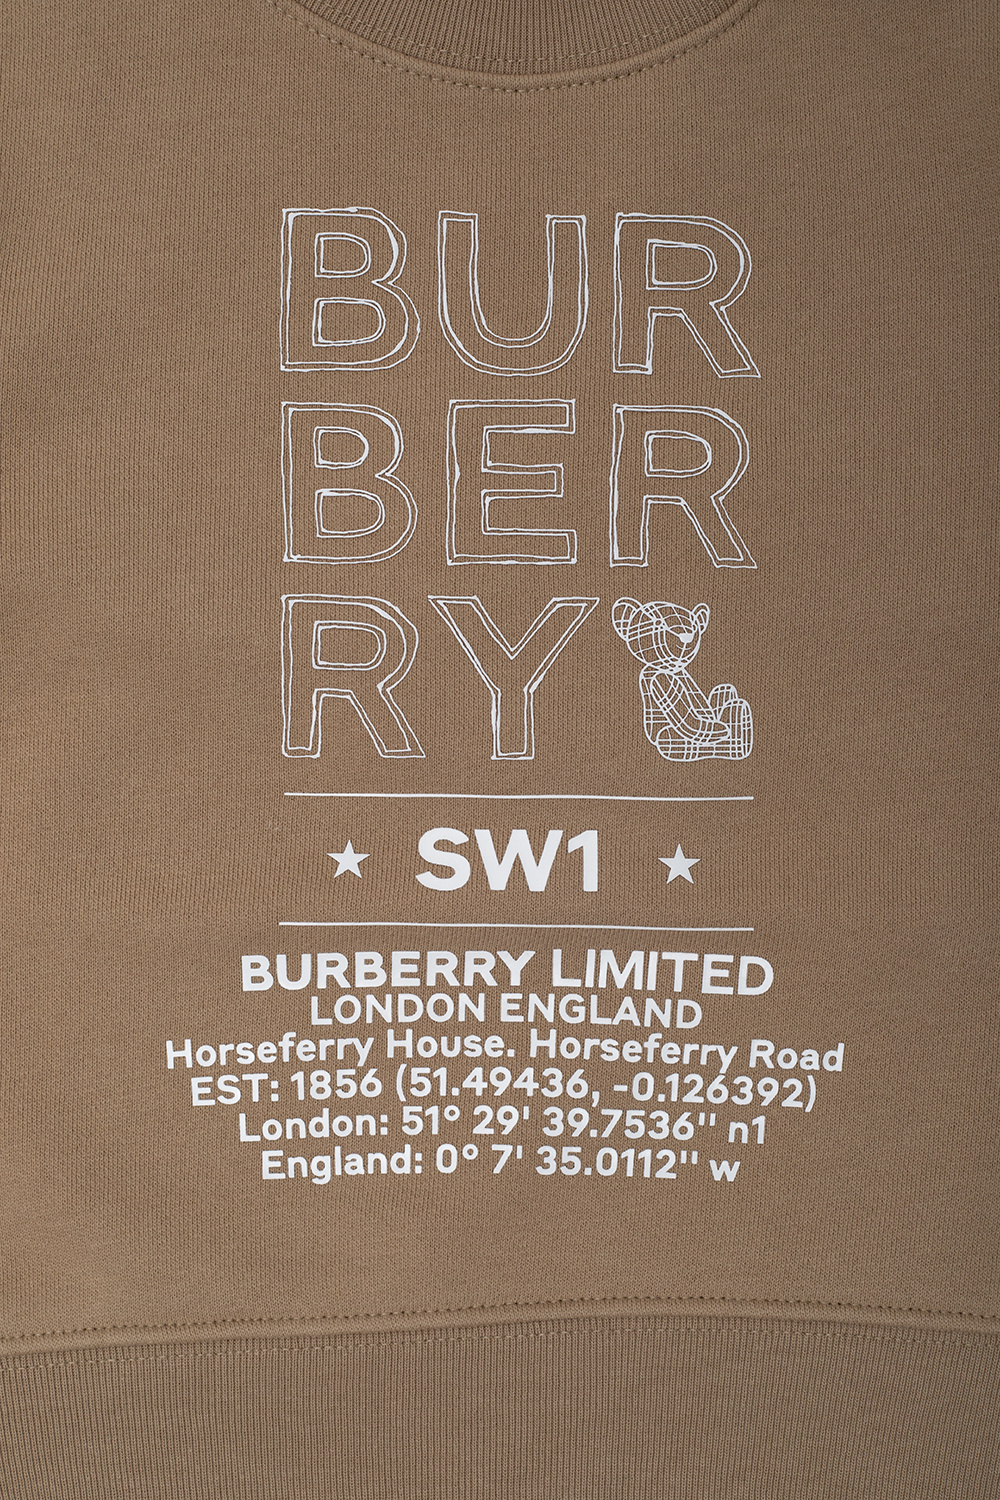 burberry Logo-strap Kids ‘Joel’ sweatshirt with logo